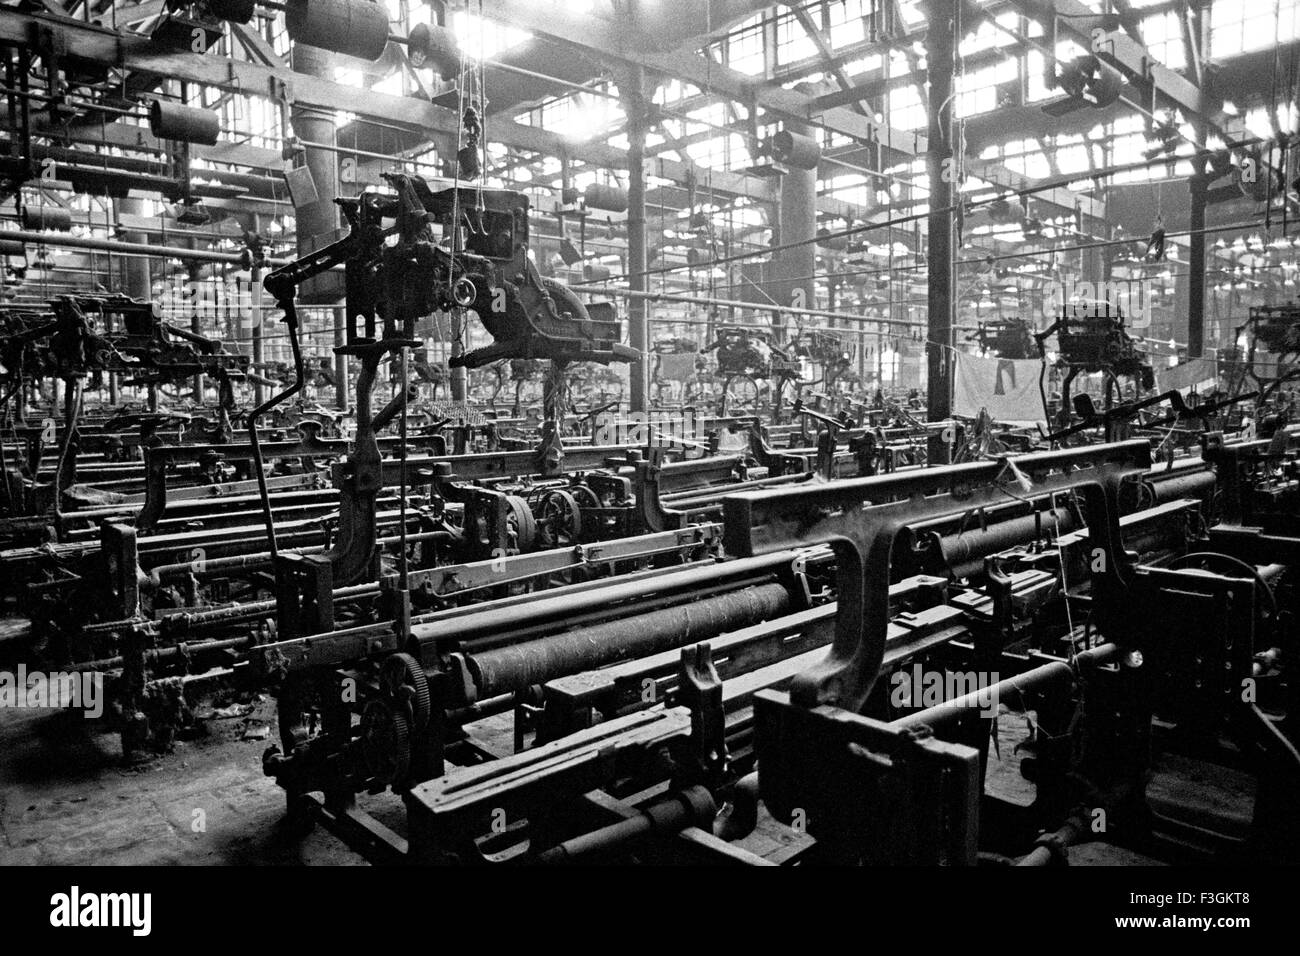 Geschlossene Textilfabrik wegen Streik Bombay Mumbai Maharashtra Indien Asien Asiatisch Indisch alter Jahrgang 1900s Bild Stockfoto